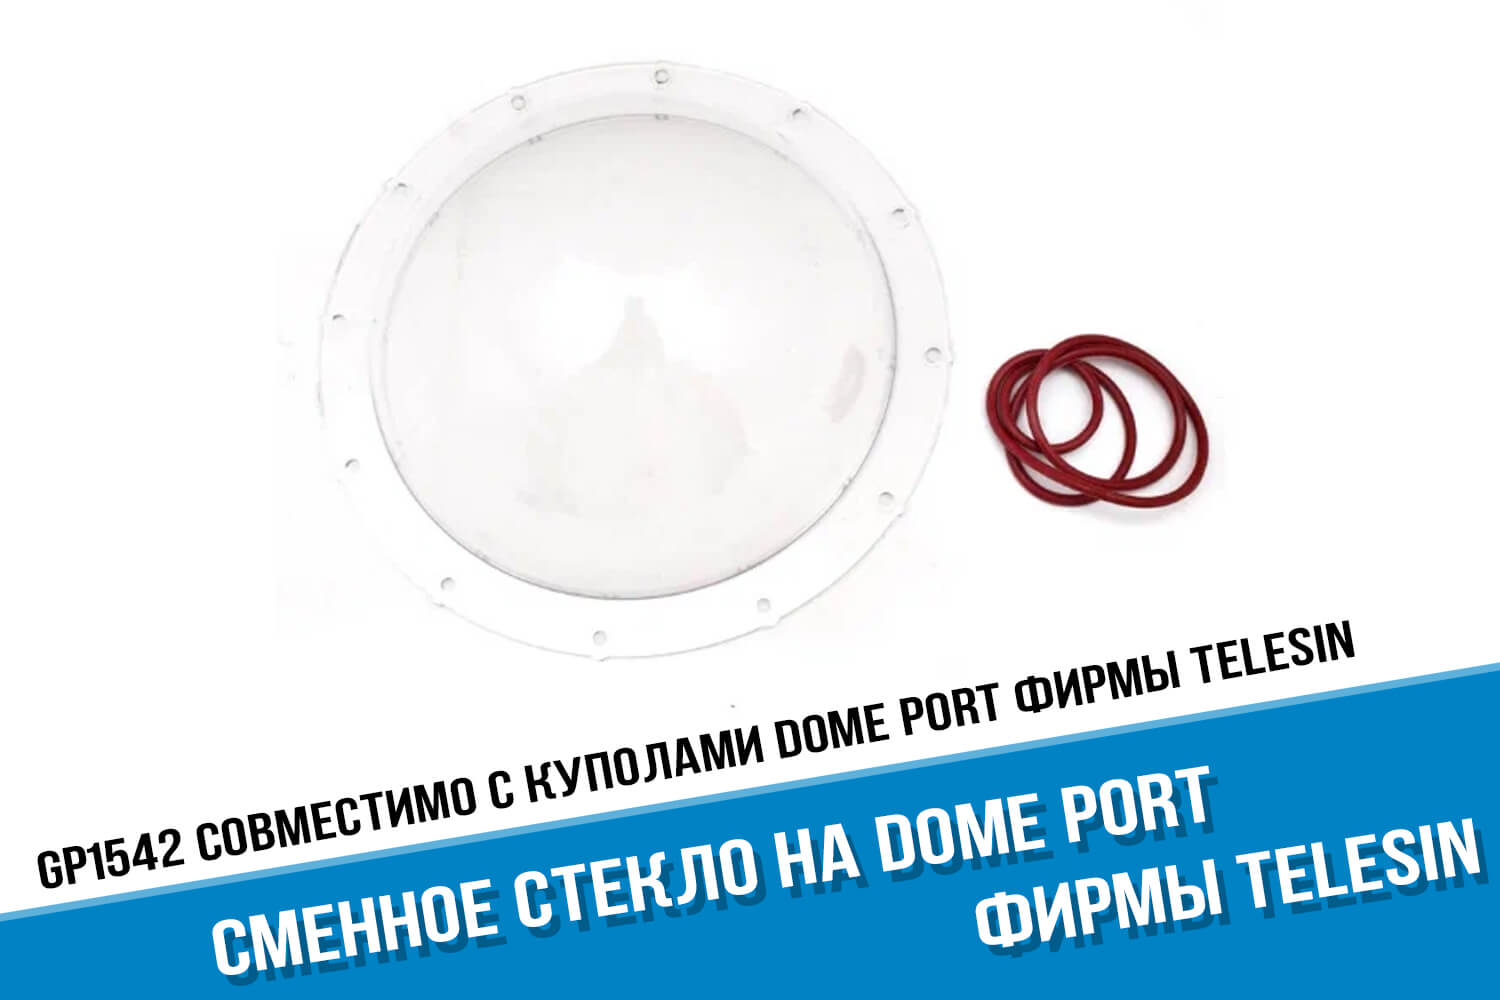 Сменное стекло купола Dome Port GoPro Telesin